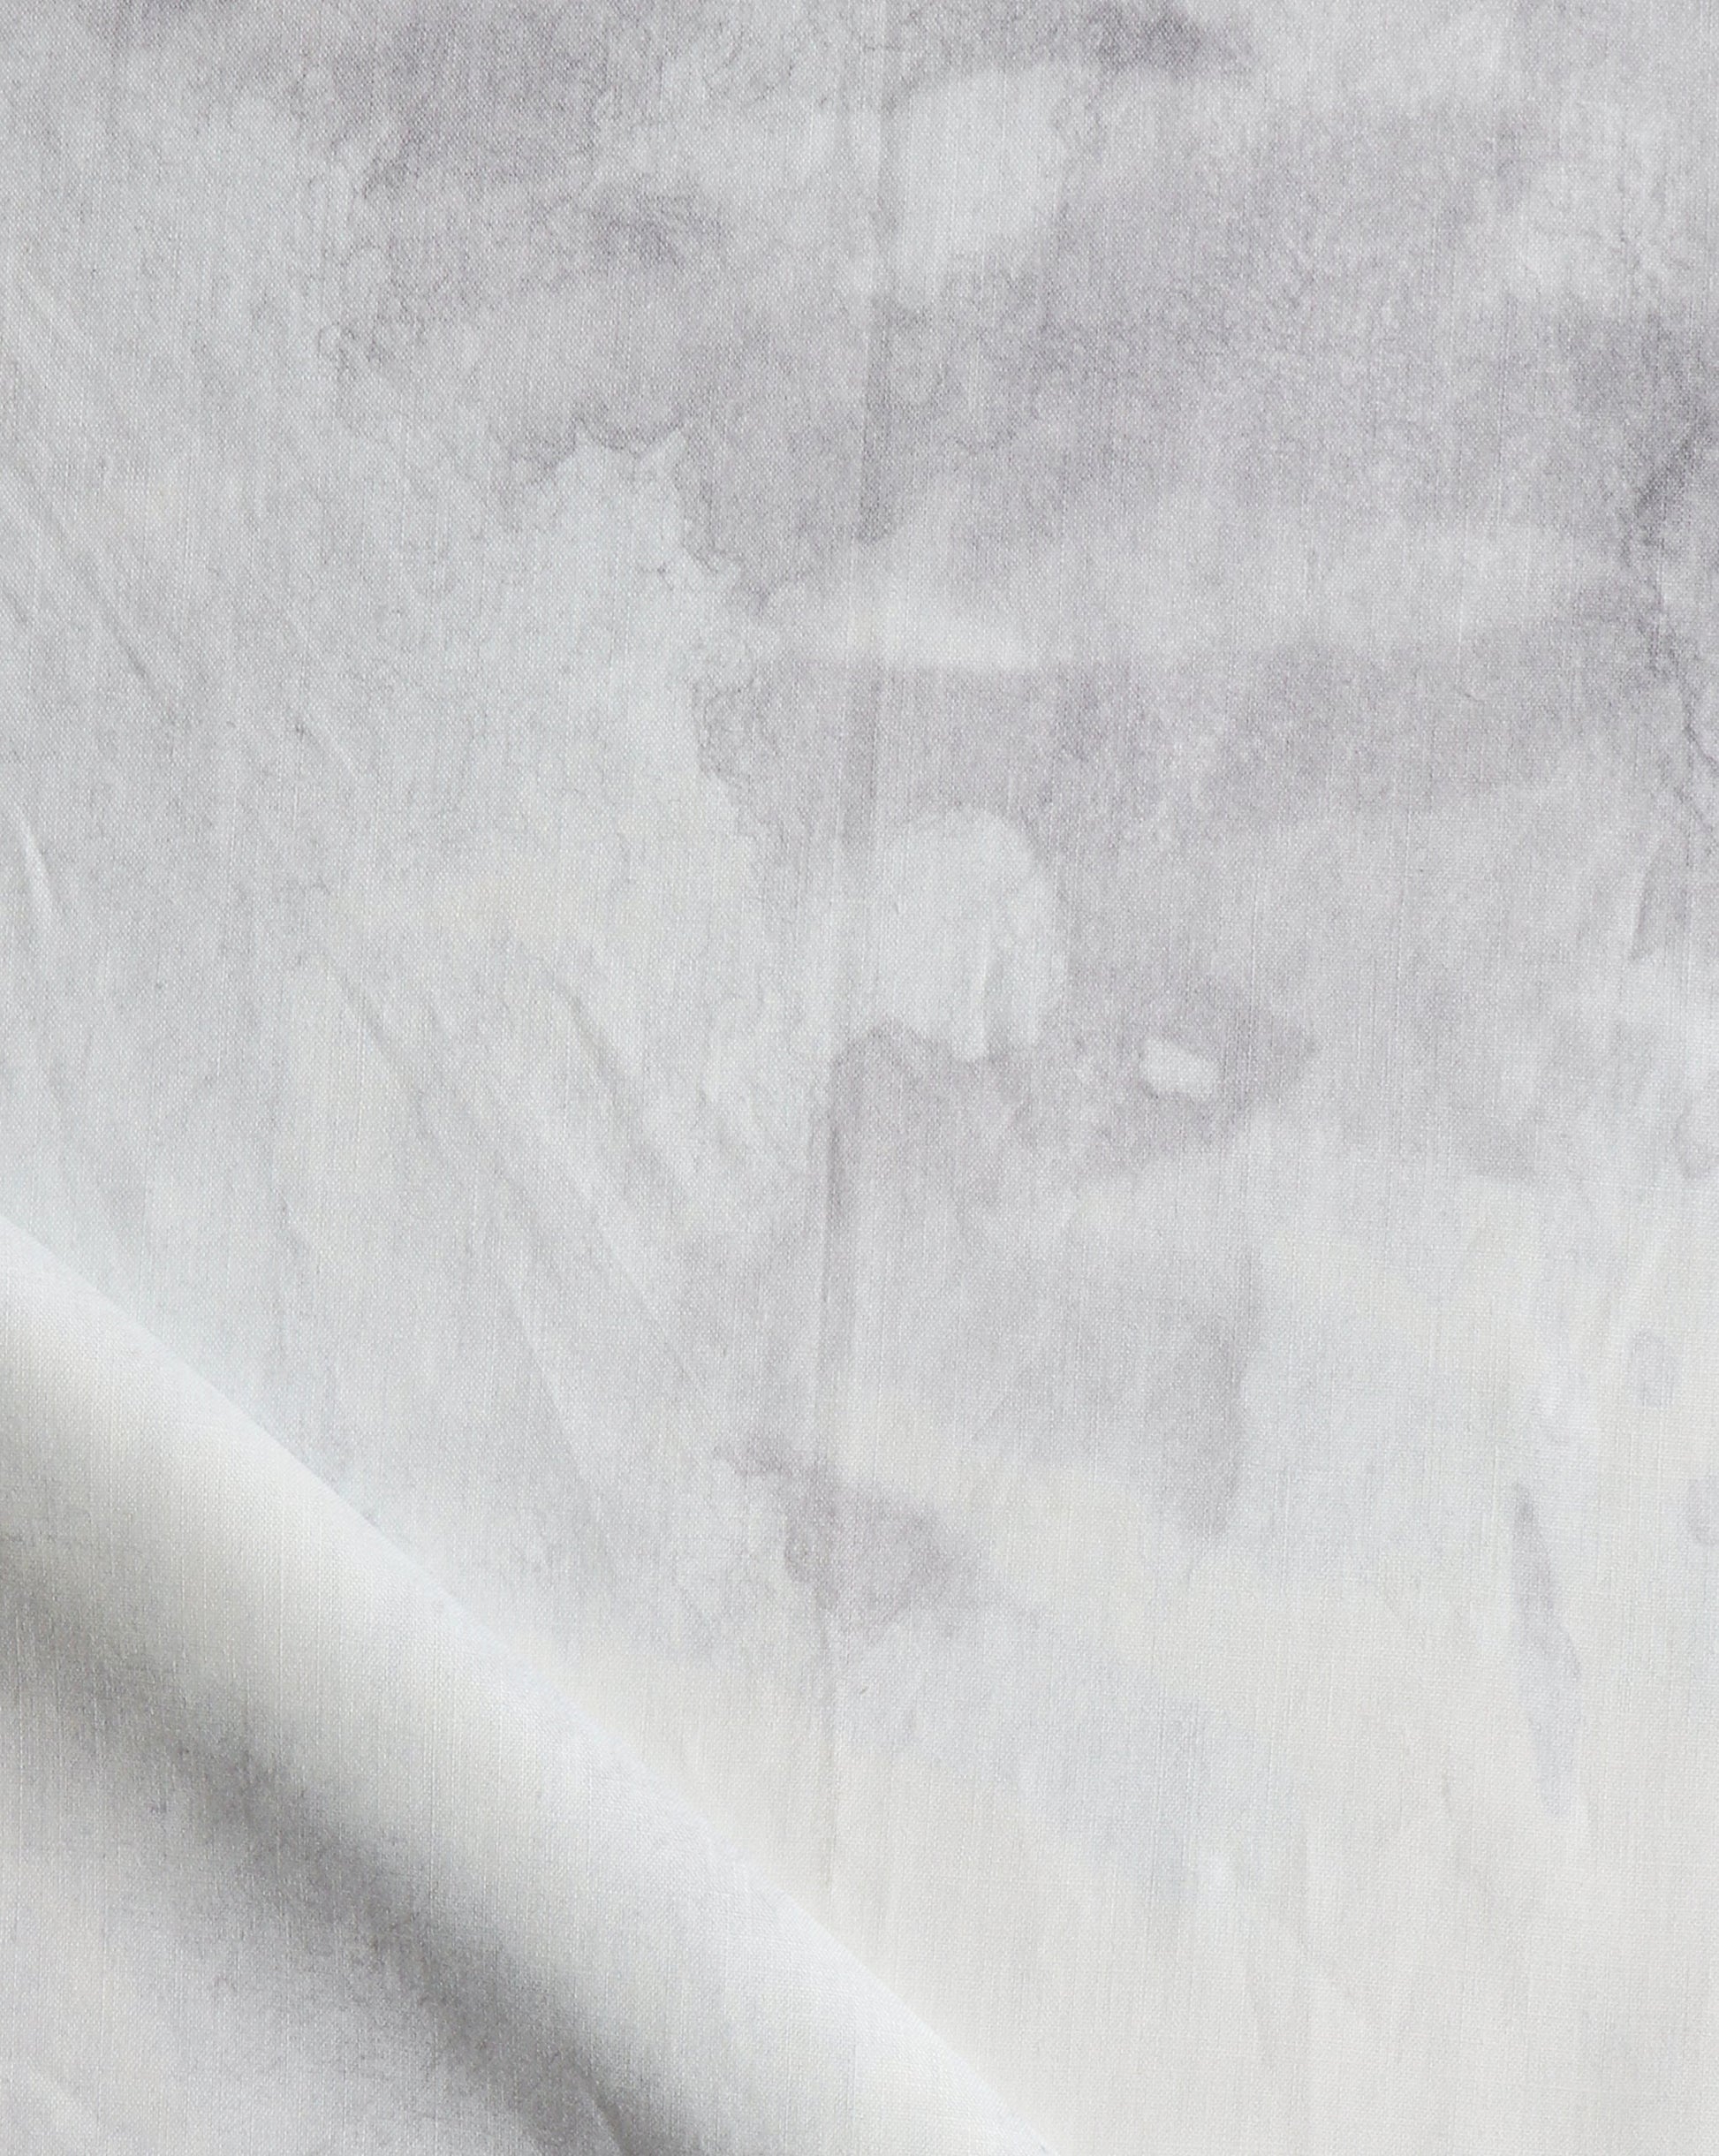 A close up of the Reflettere Fabric Aqua